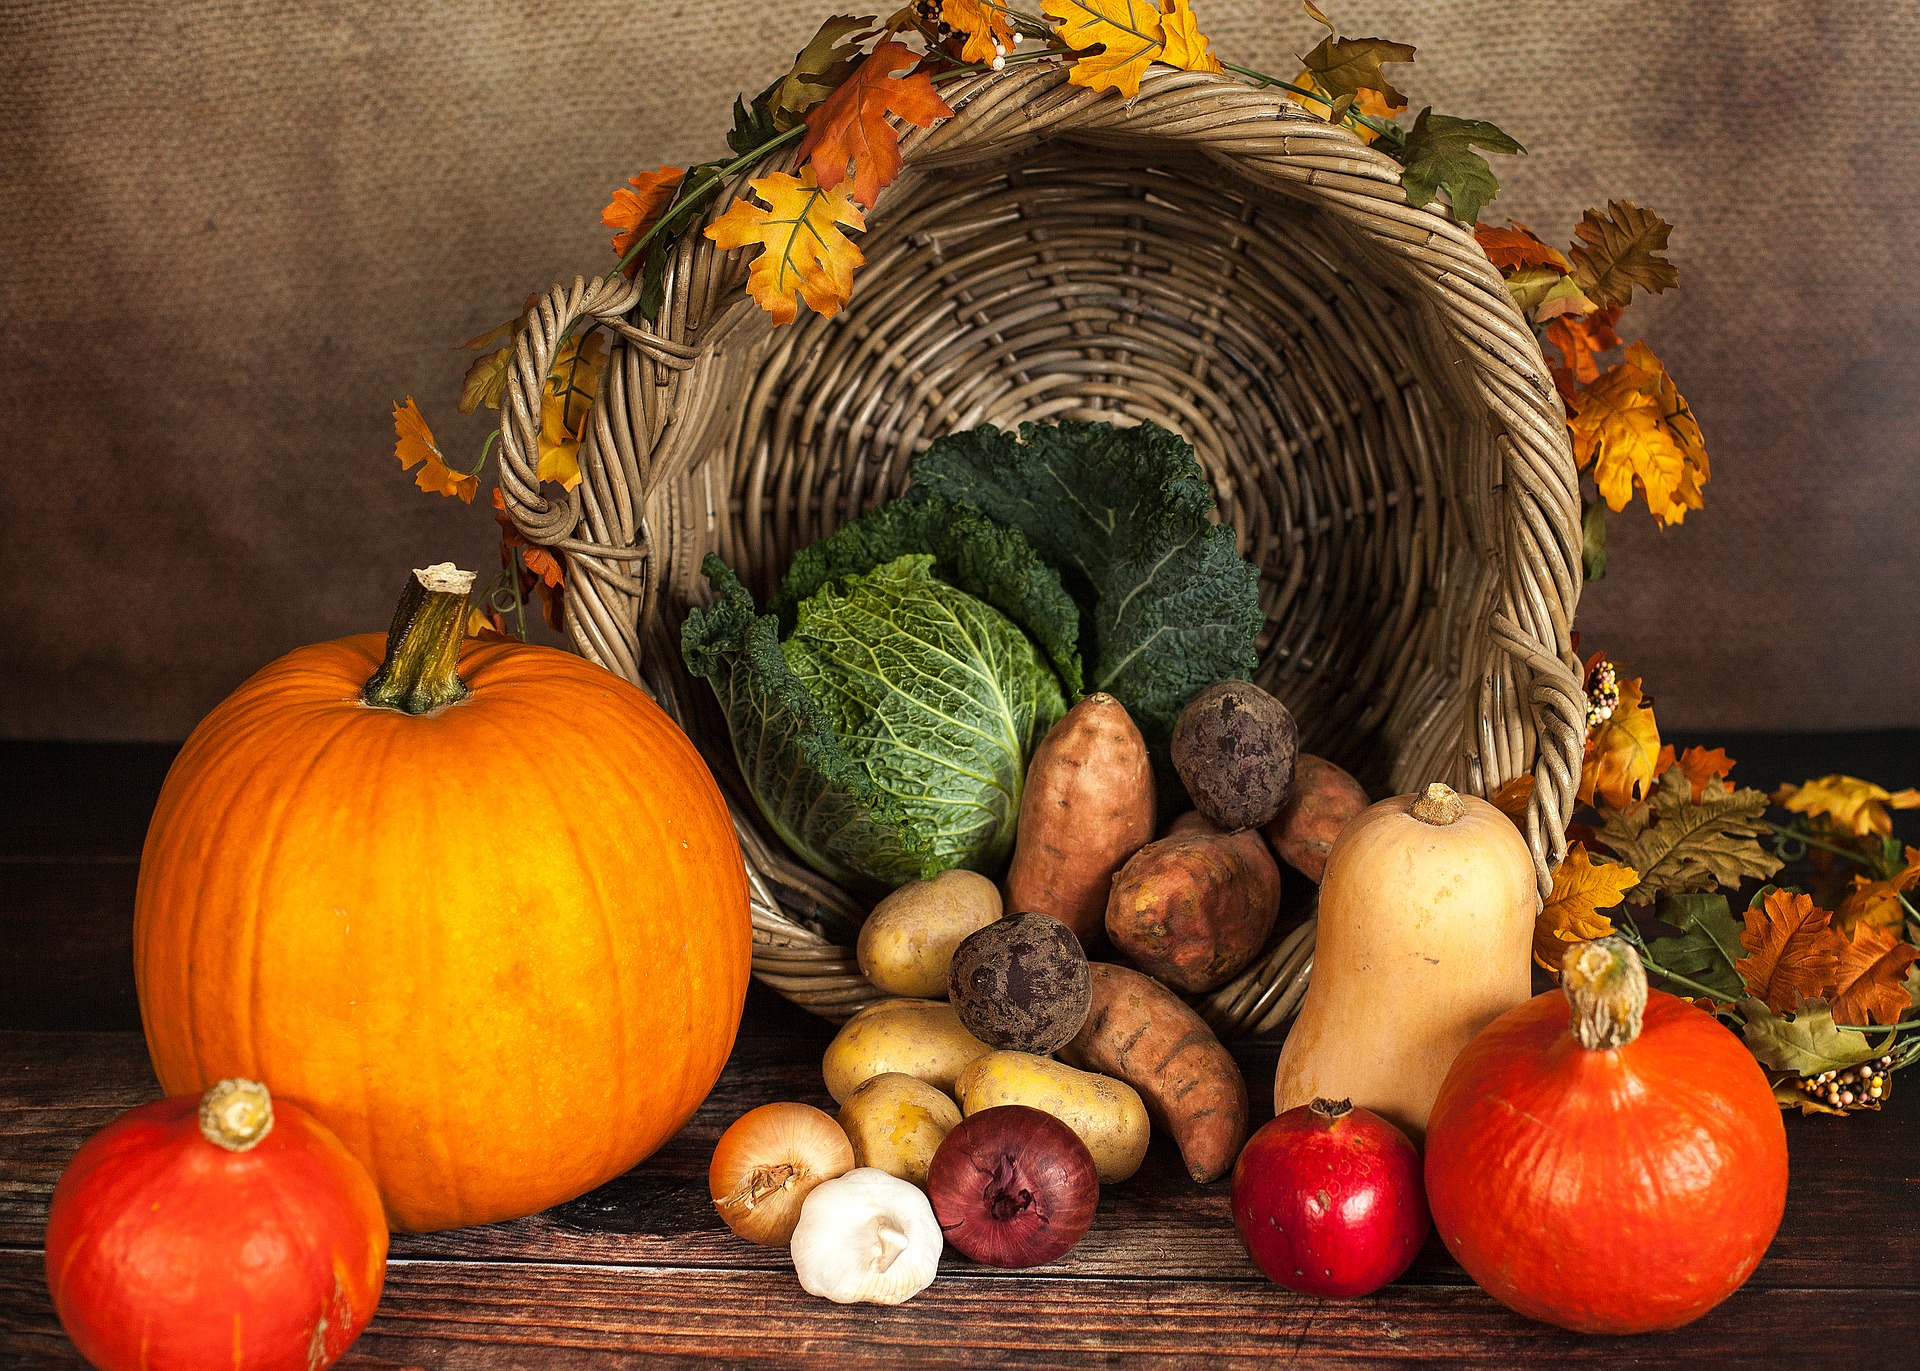 pumpkin-1768857_1920 (c) www.pixabay.com